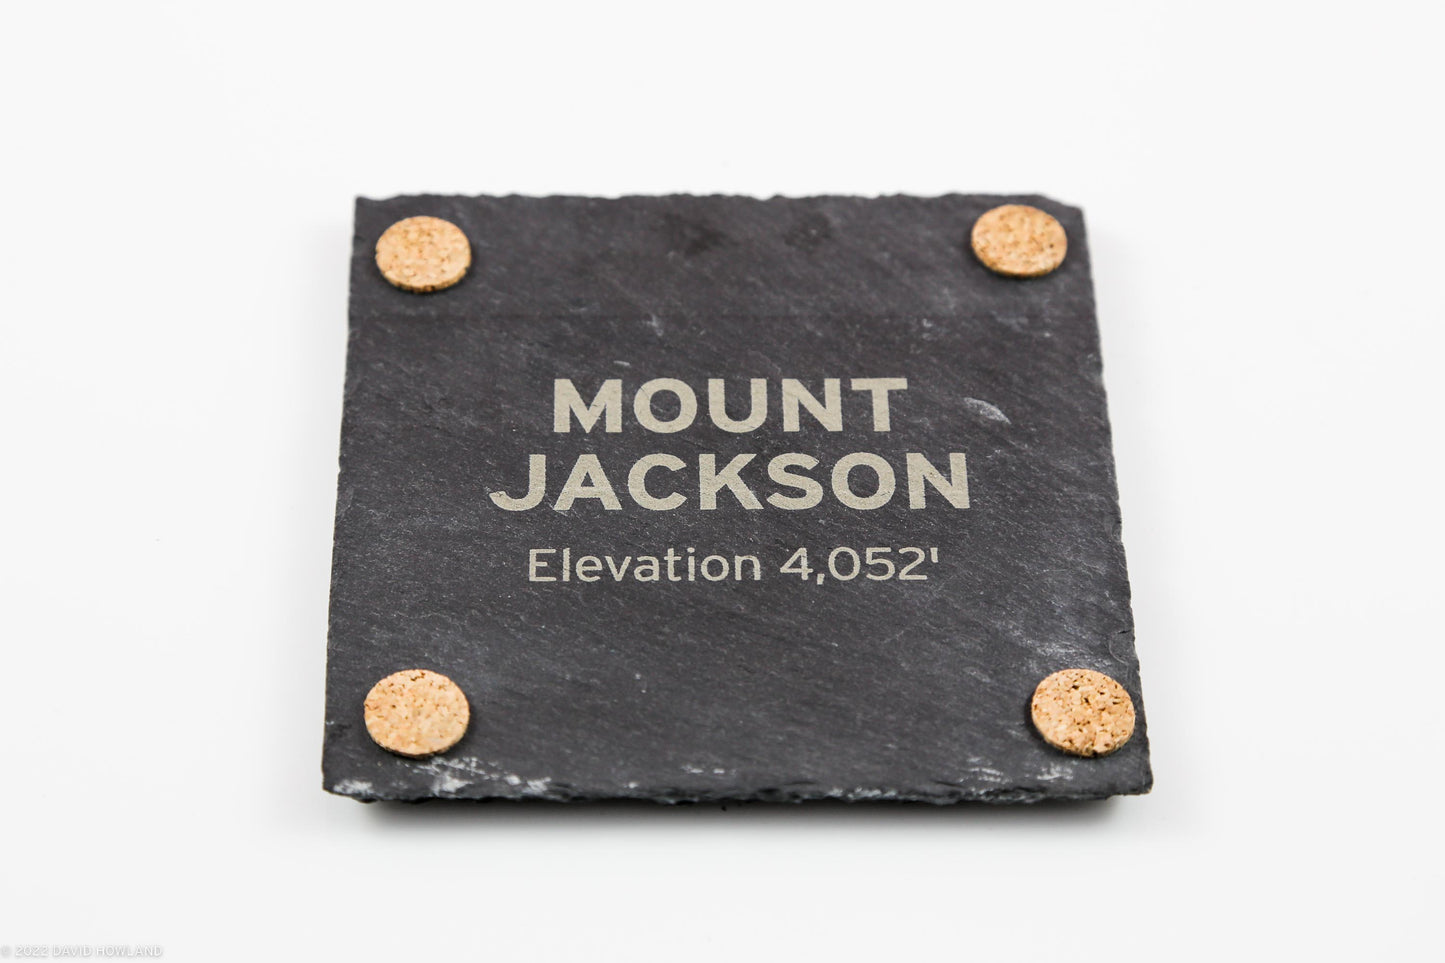 Mount Jackson Topographic Map Slate Coaster